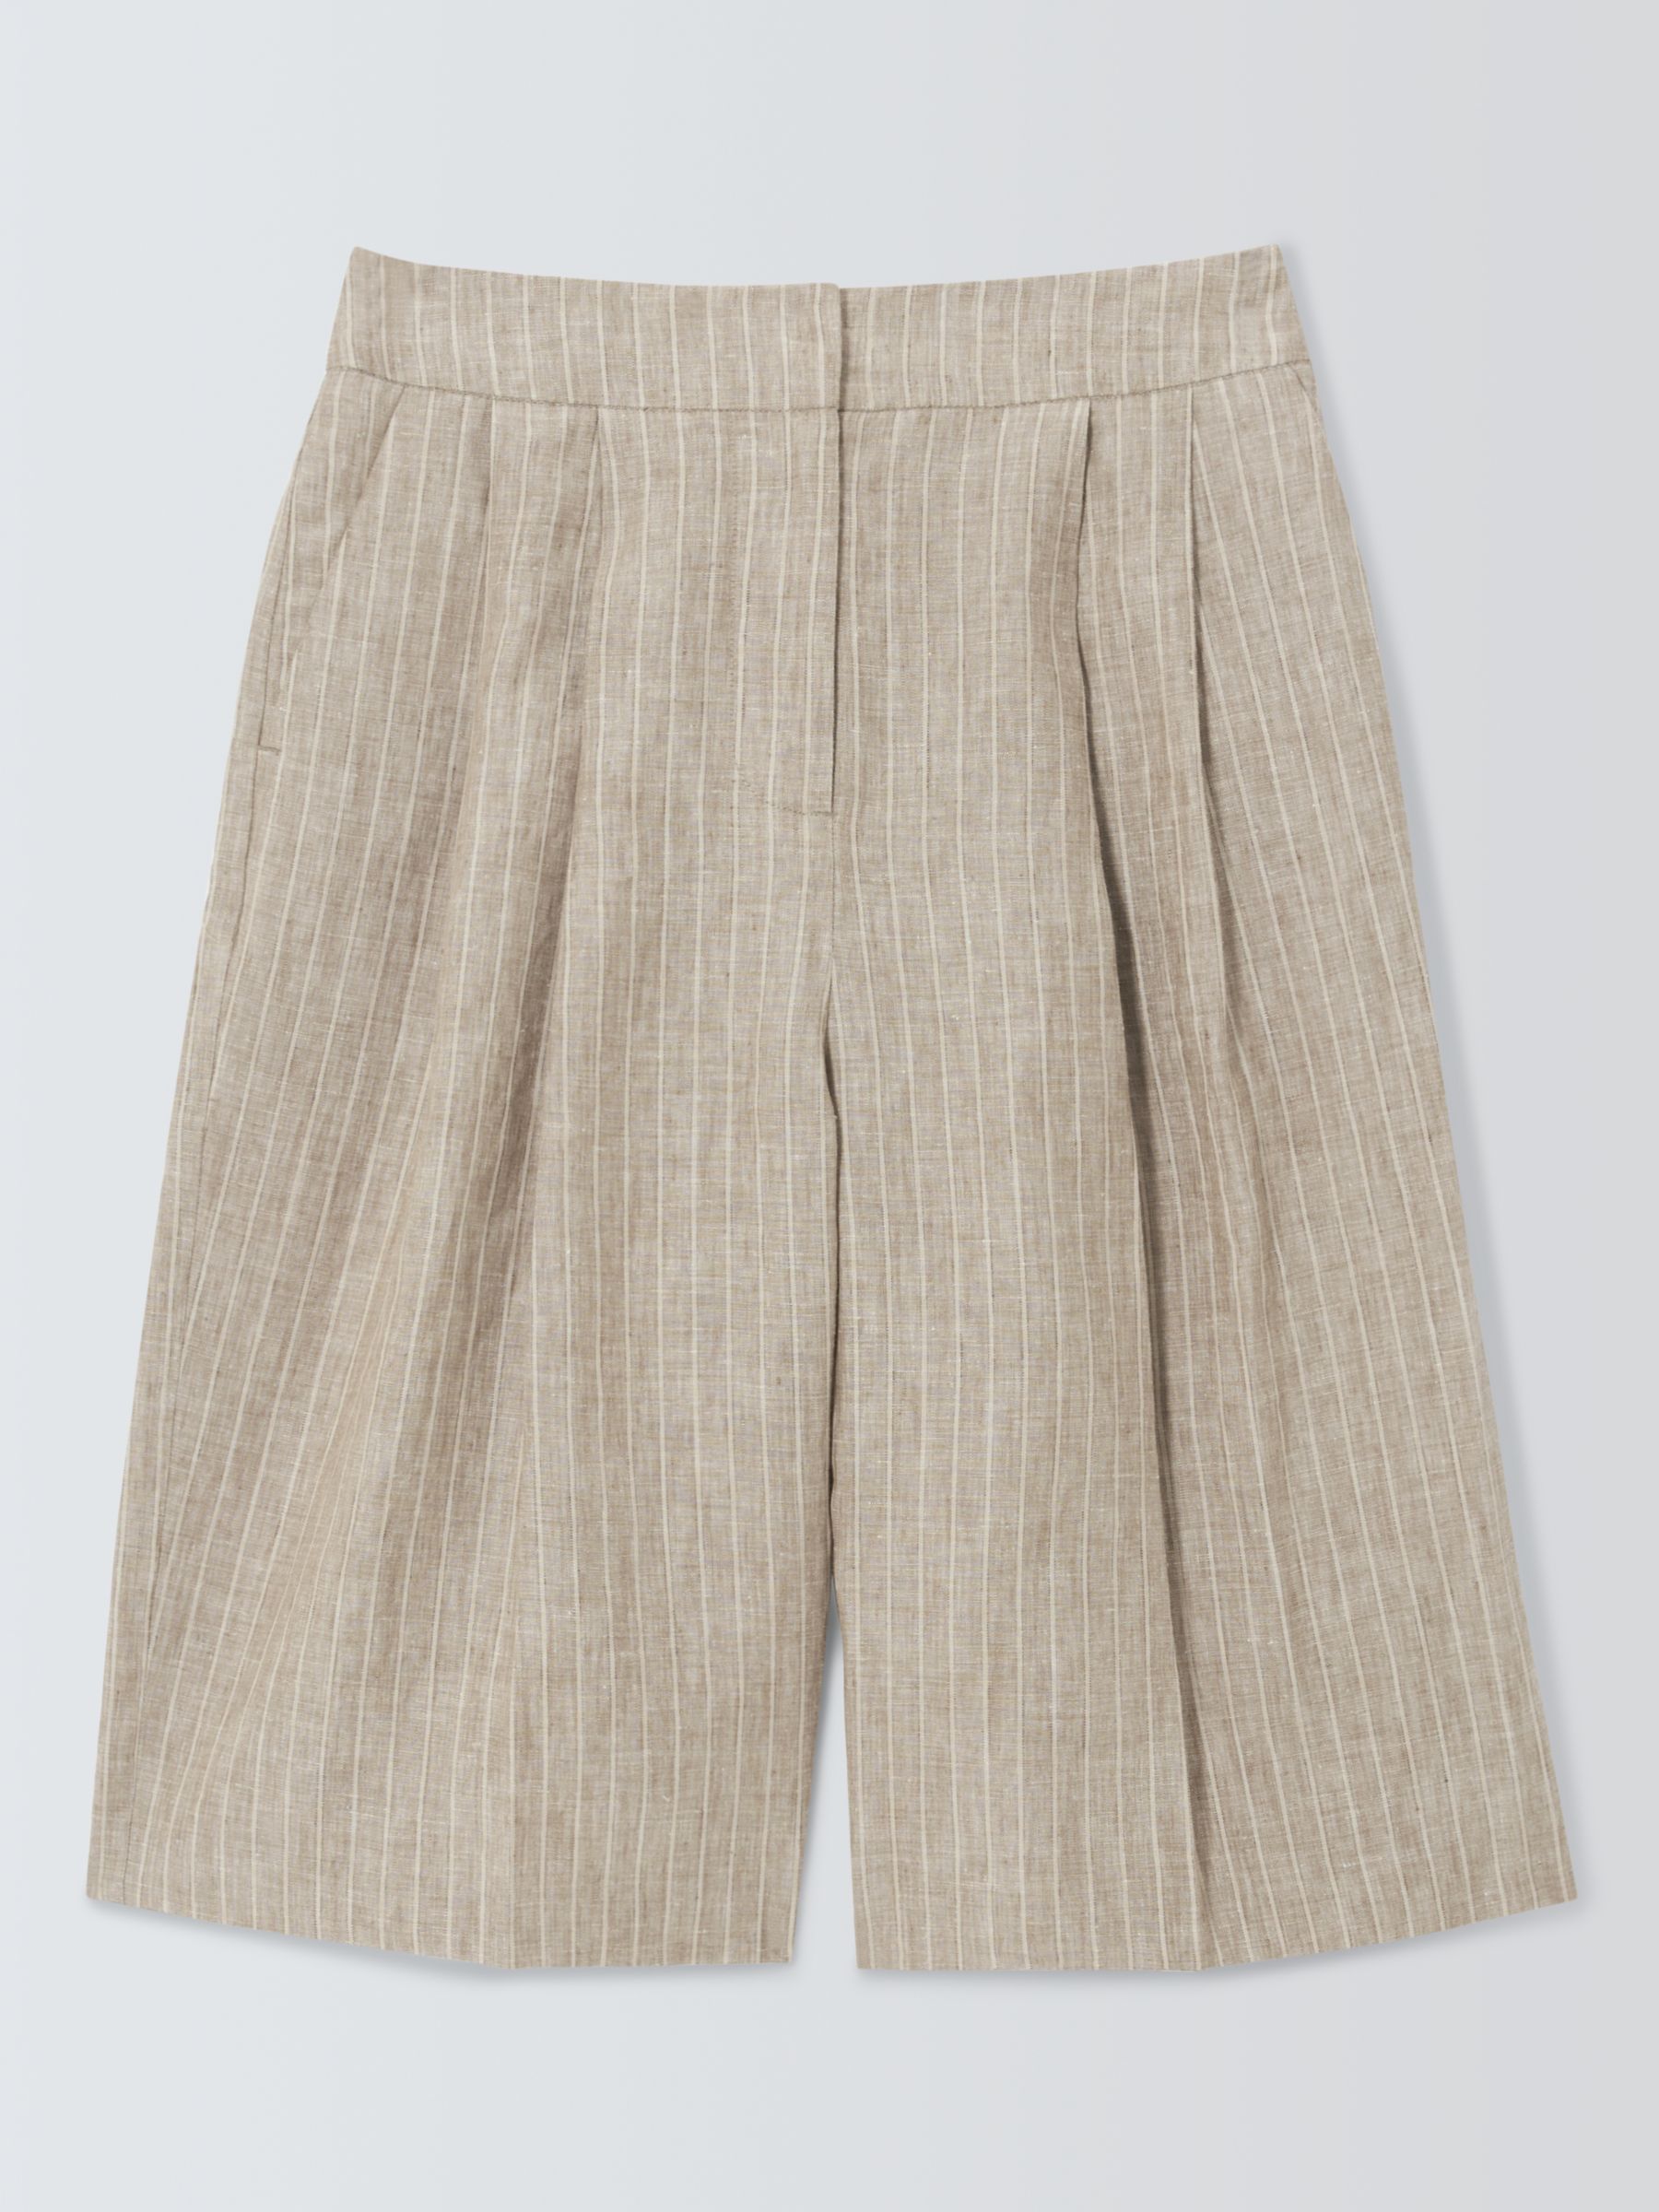 John Lewis Stripe Linen Shorts, Natural, 14